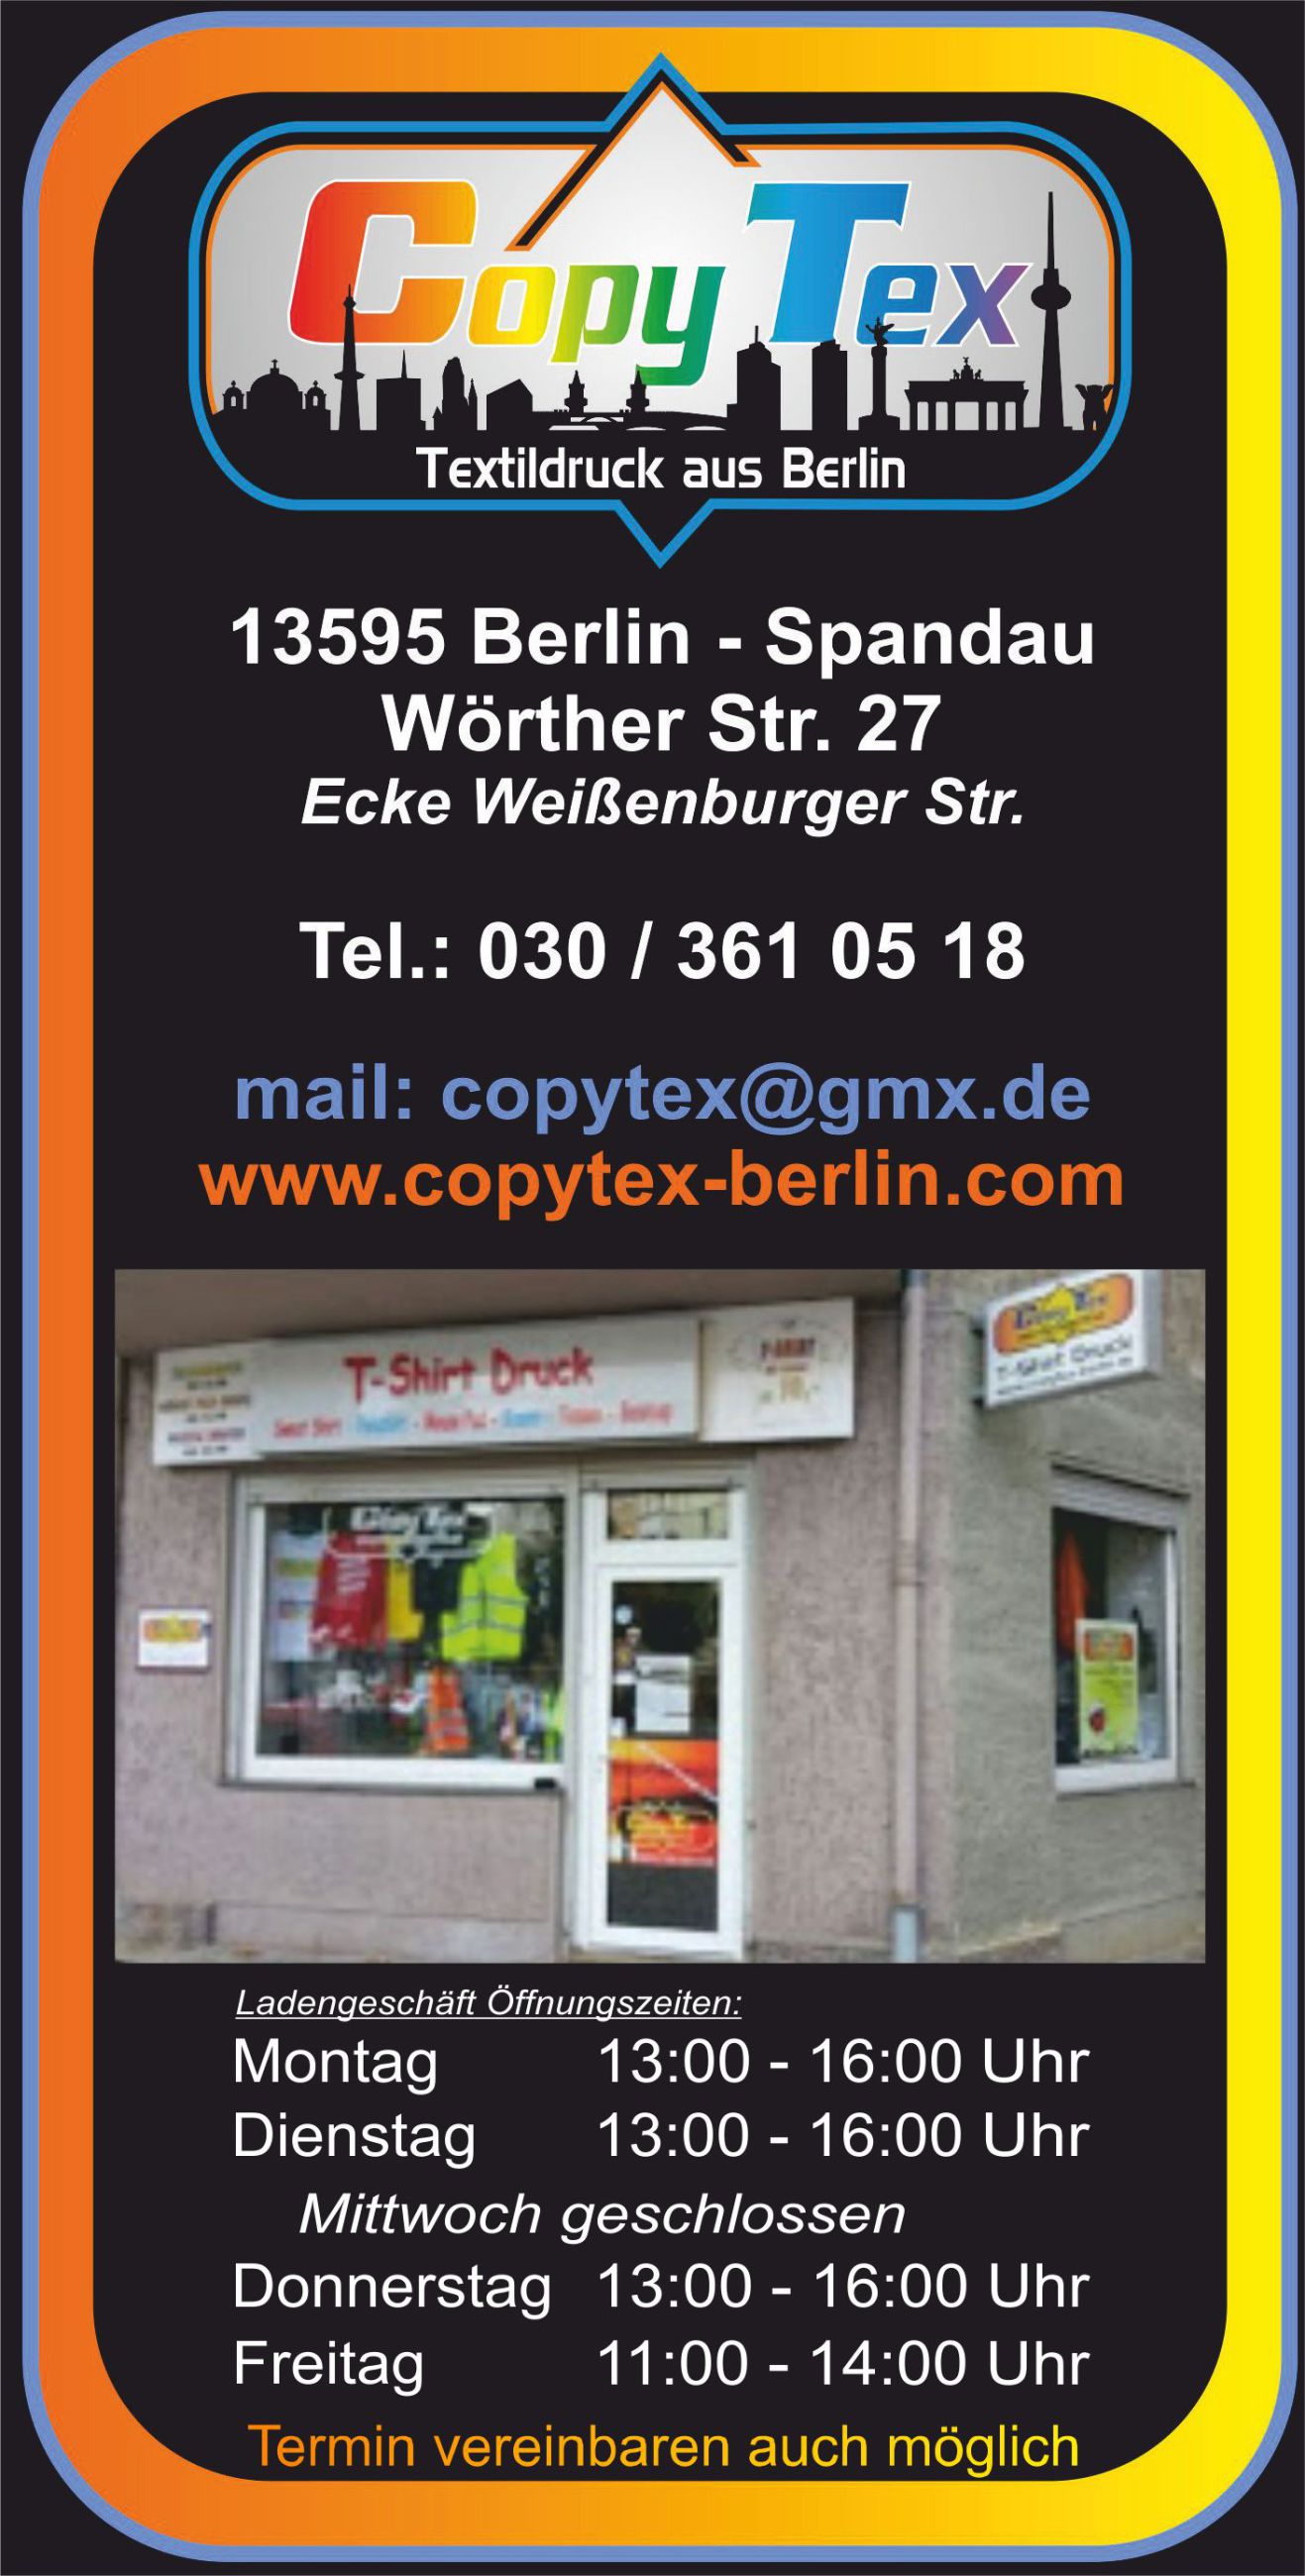 (c) Copytex-berlin.com